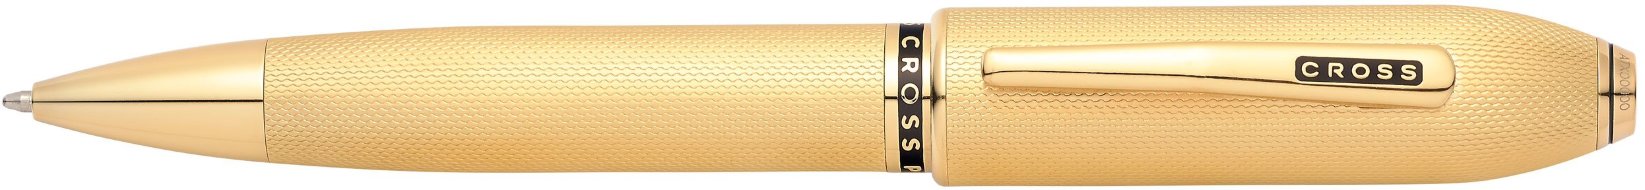 Шариковая ручка Cross Peerless 125, 23K Heavy Gold Plate